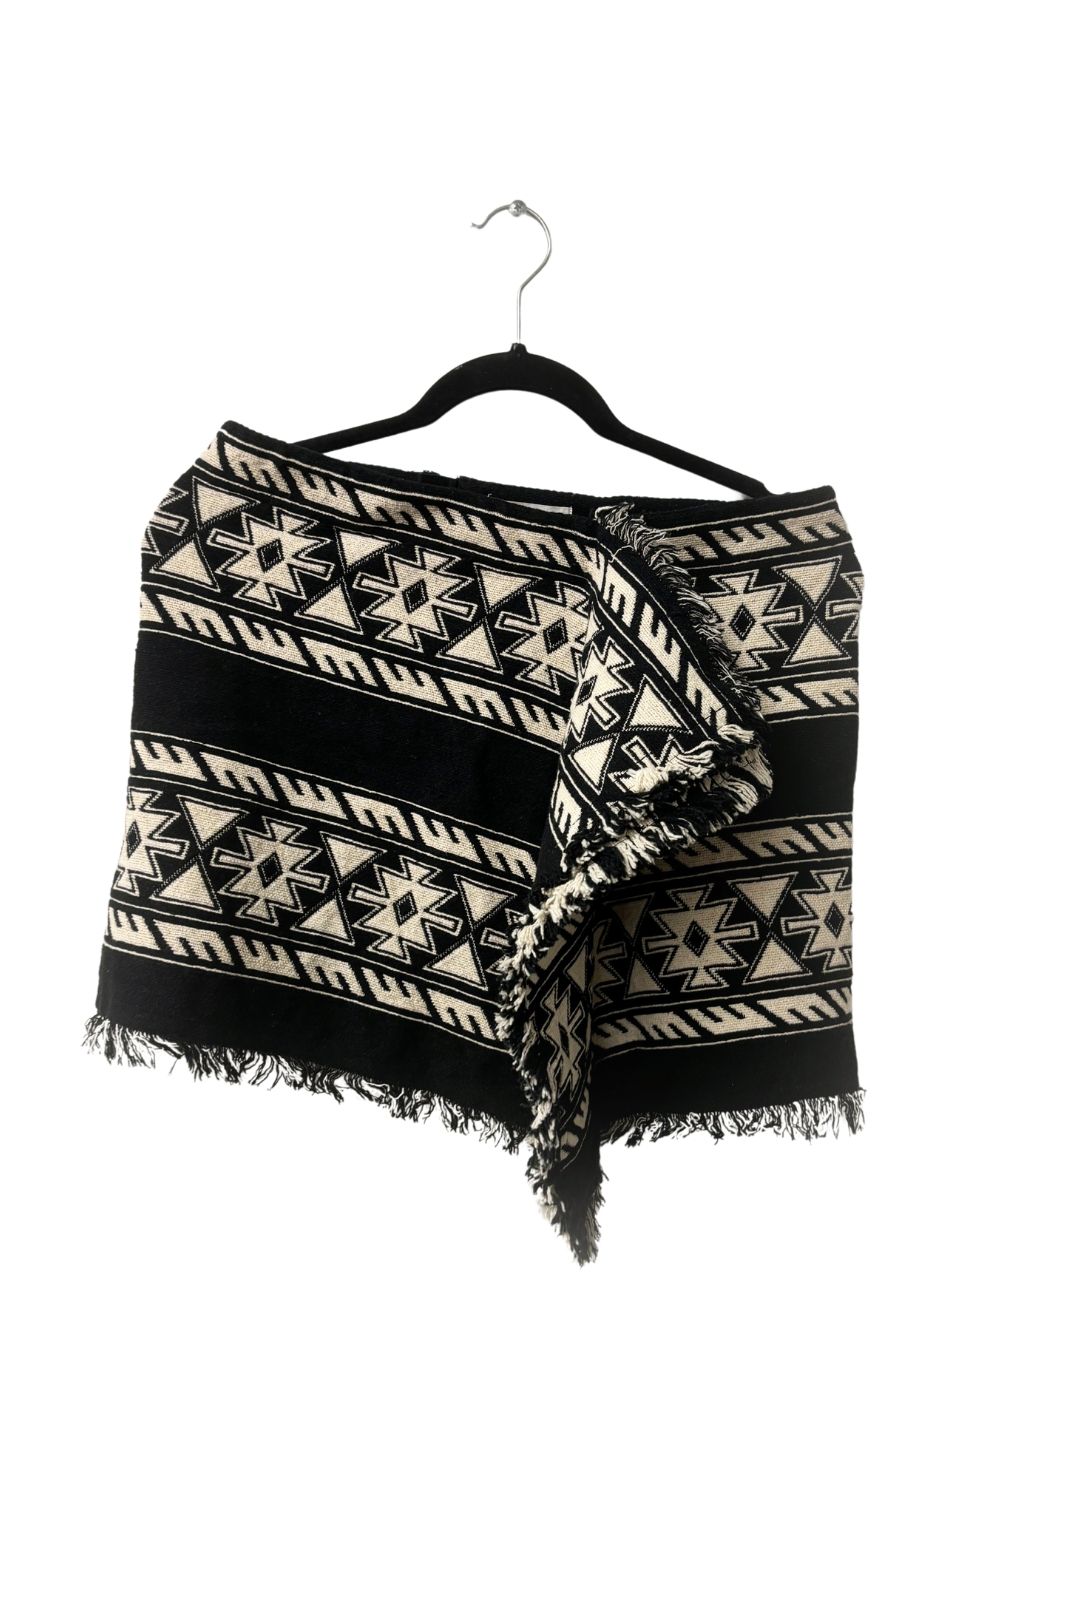 Isabel Marant Jiloa Wrap-Effect Frayed Cotton-Jacquard Mini Skirt